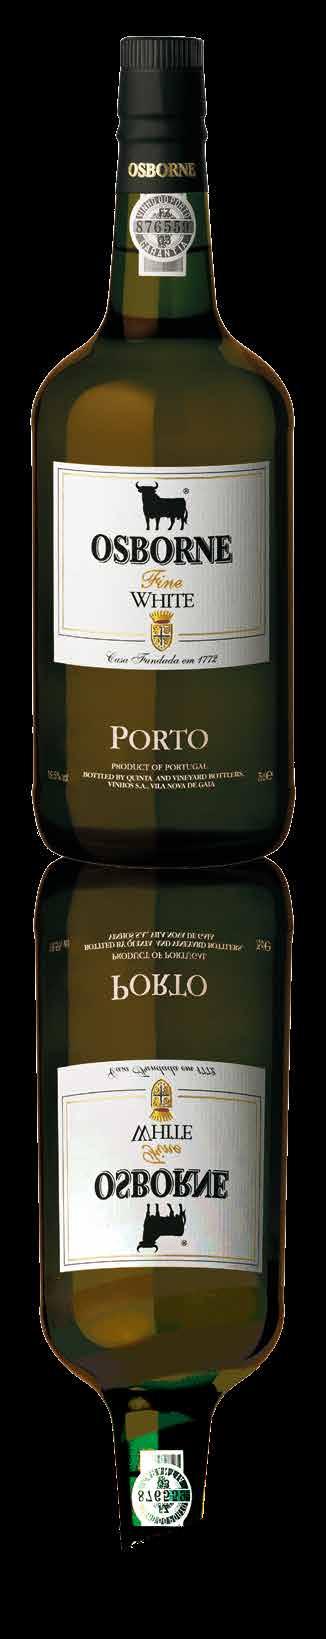 Port & sherry Bestel deze wijnen op Huib Subiele aroma, s port & sherry tussen 6,- en 8,- port & sherry tussen 10,- en 20,- port & sherry tussen 20,- en 30,- DE ZOETE WIJN HEEFT EEN INTENSE